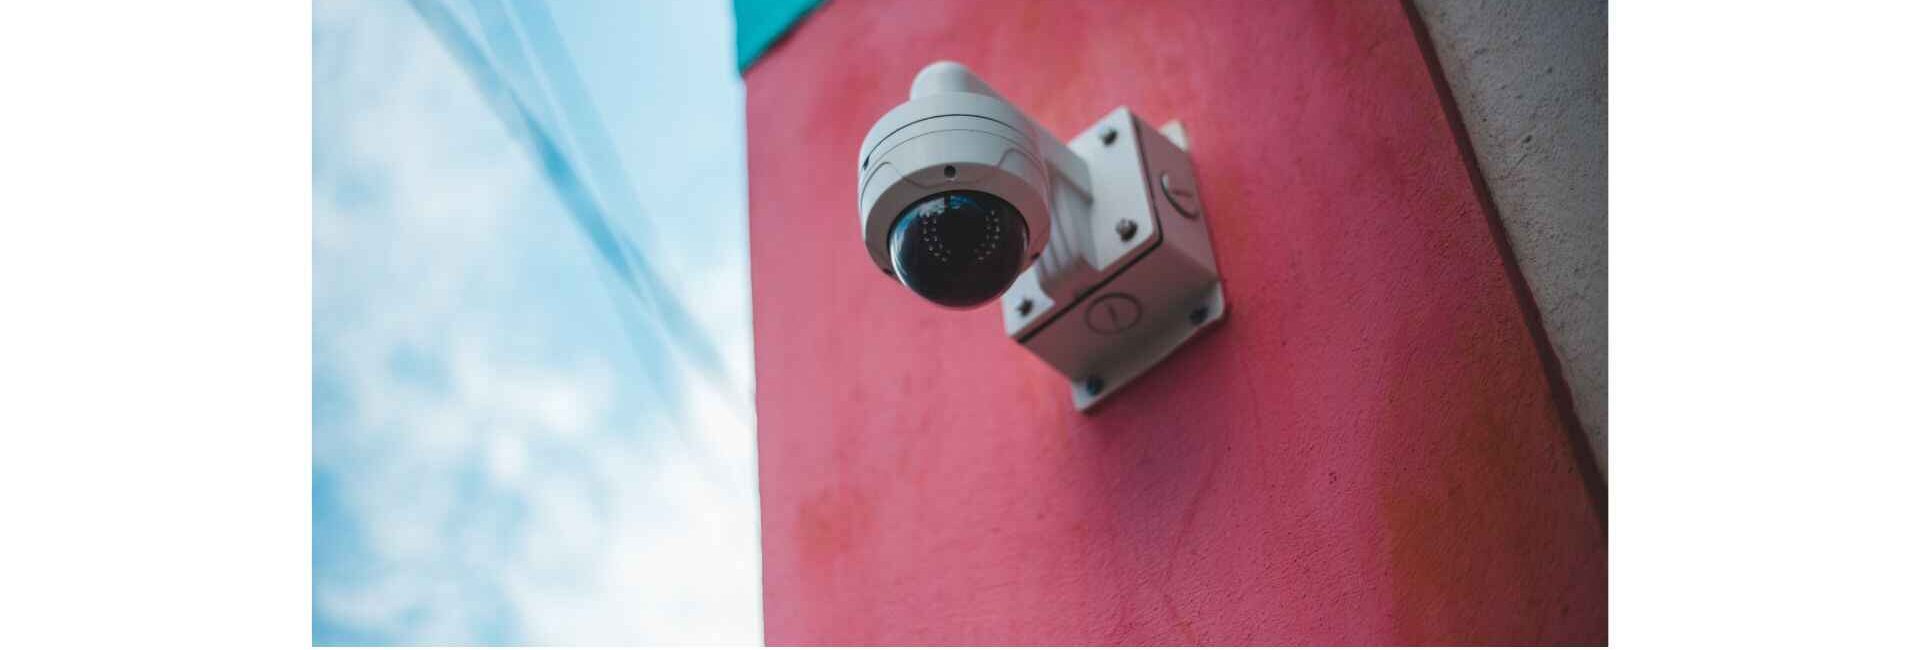 Sparsh CCTV - Security System Dealer and Supplier in Noida